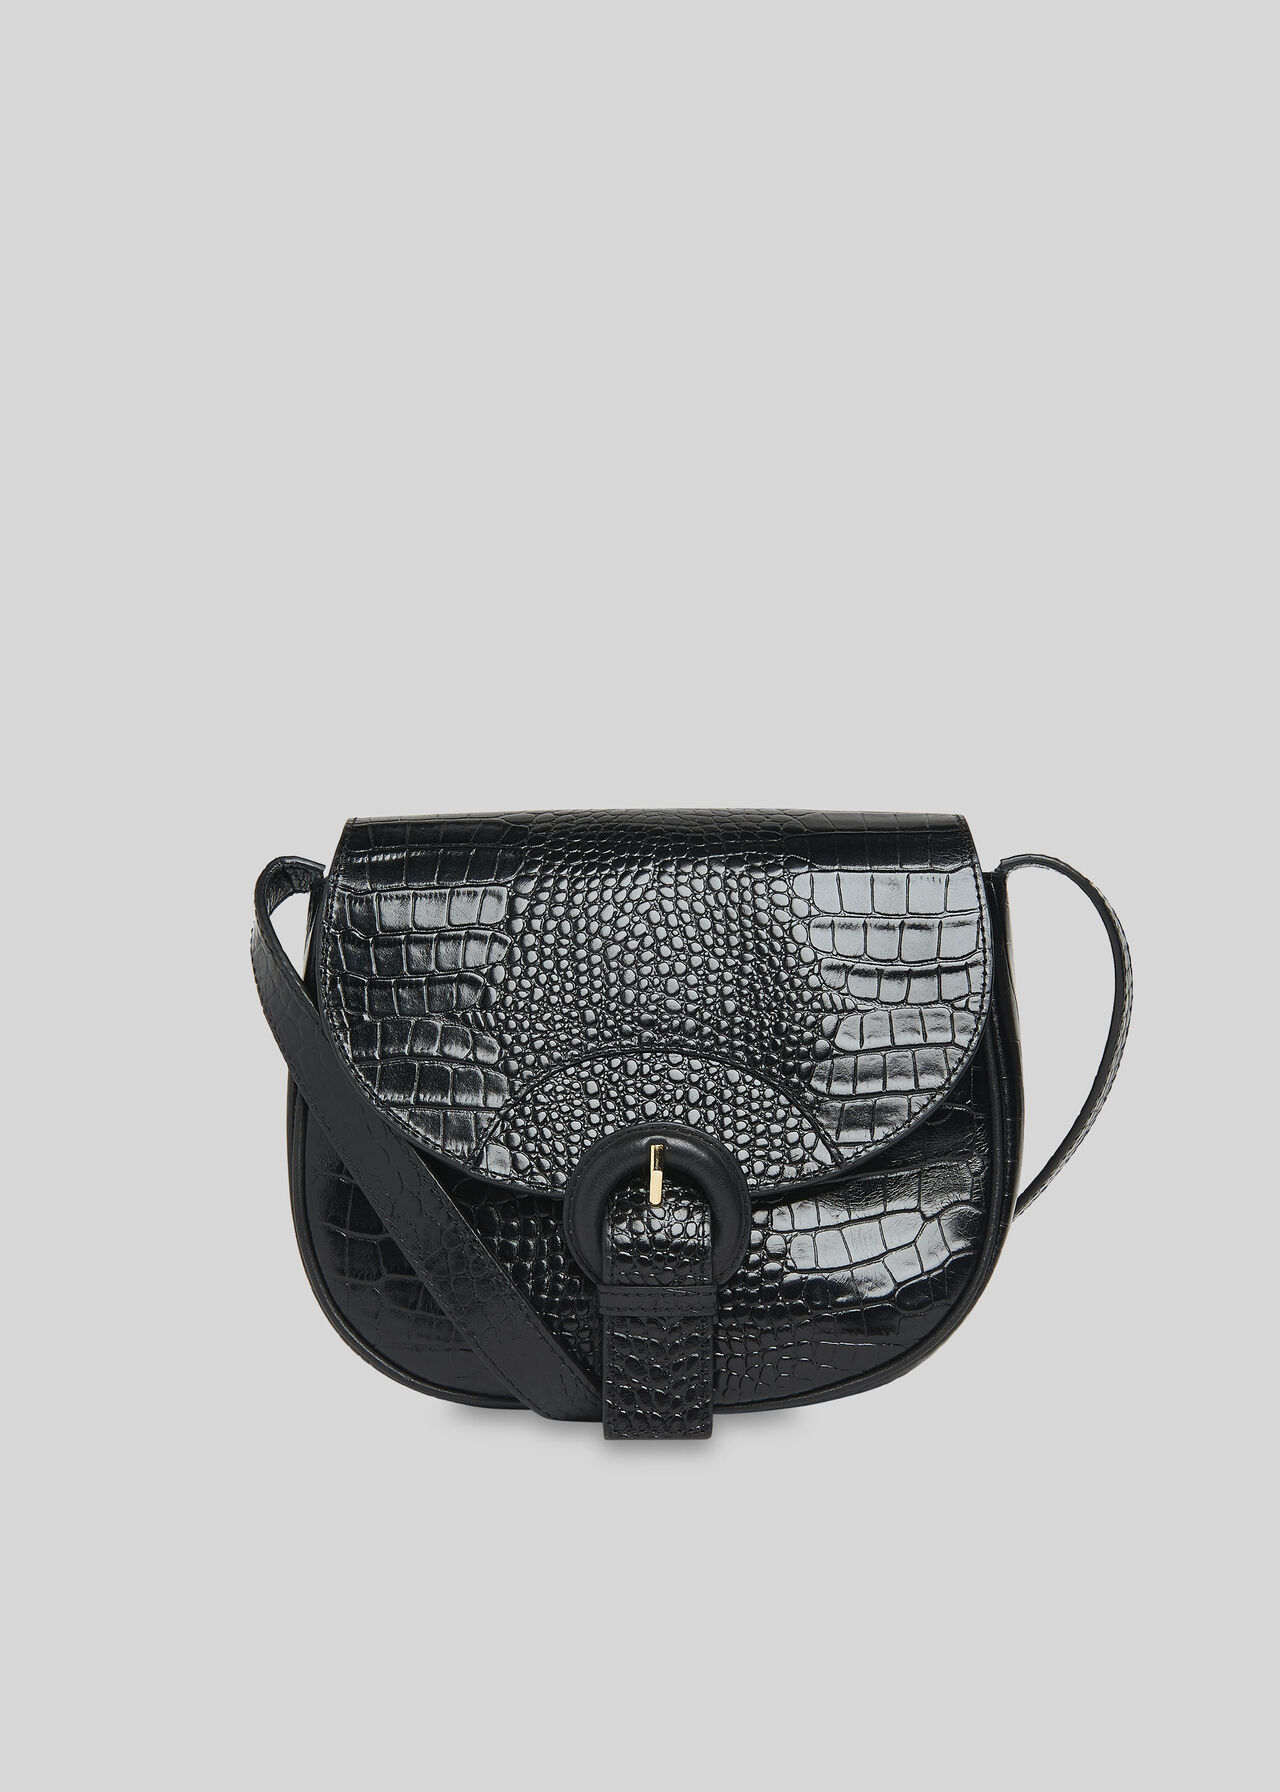 Black Leon Croc Saddle Bag | WHISTLES